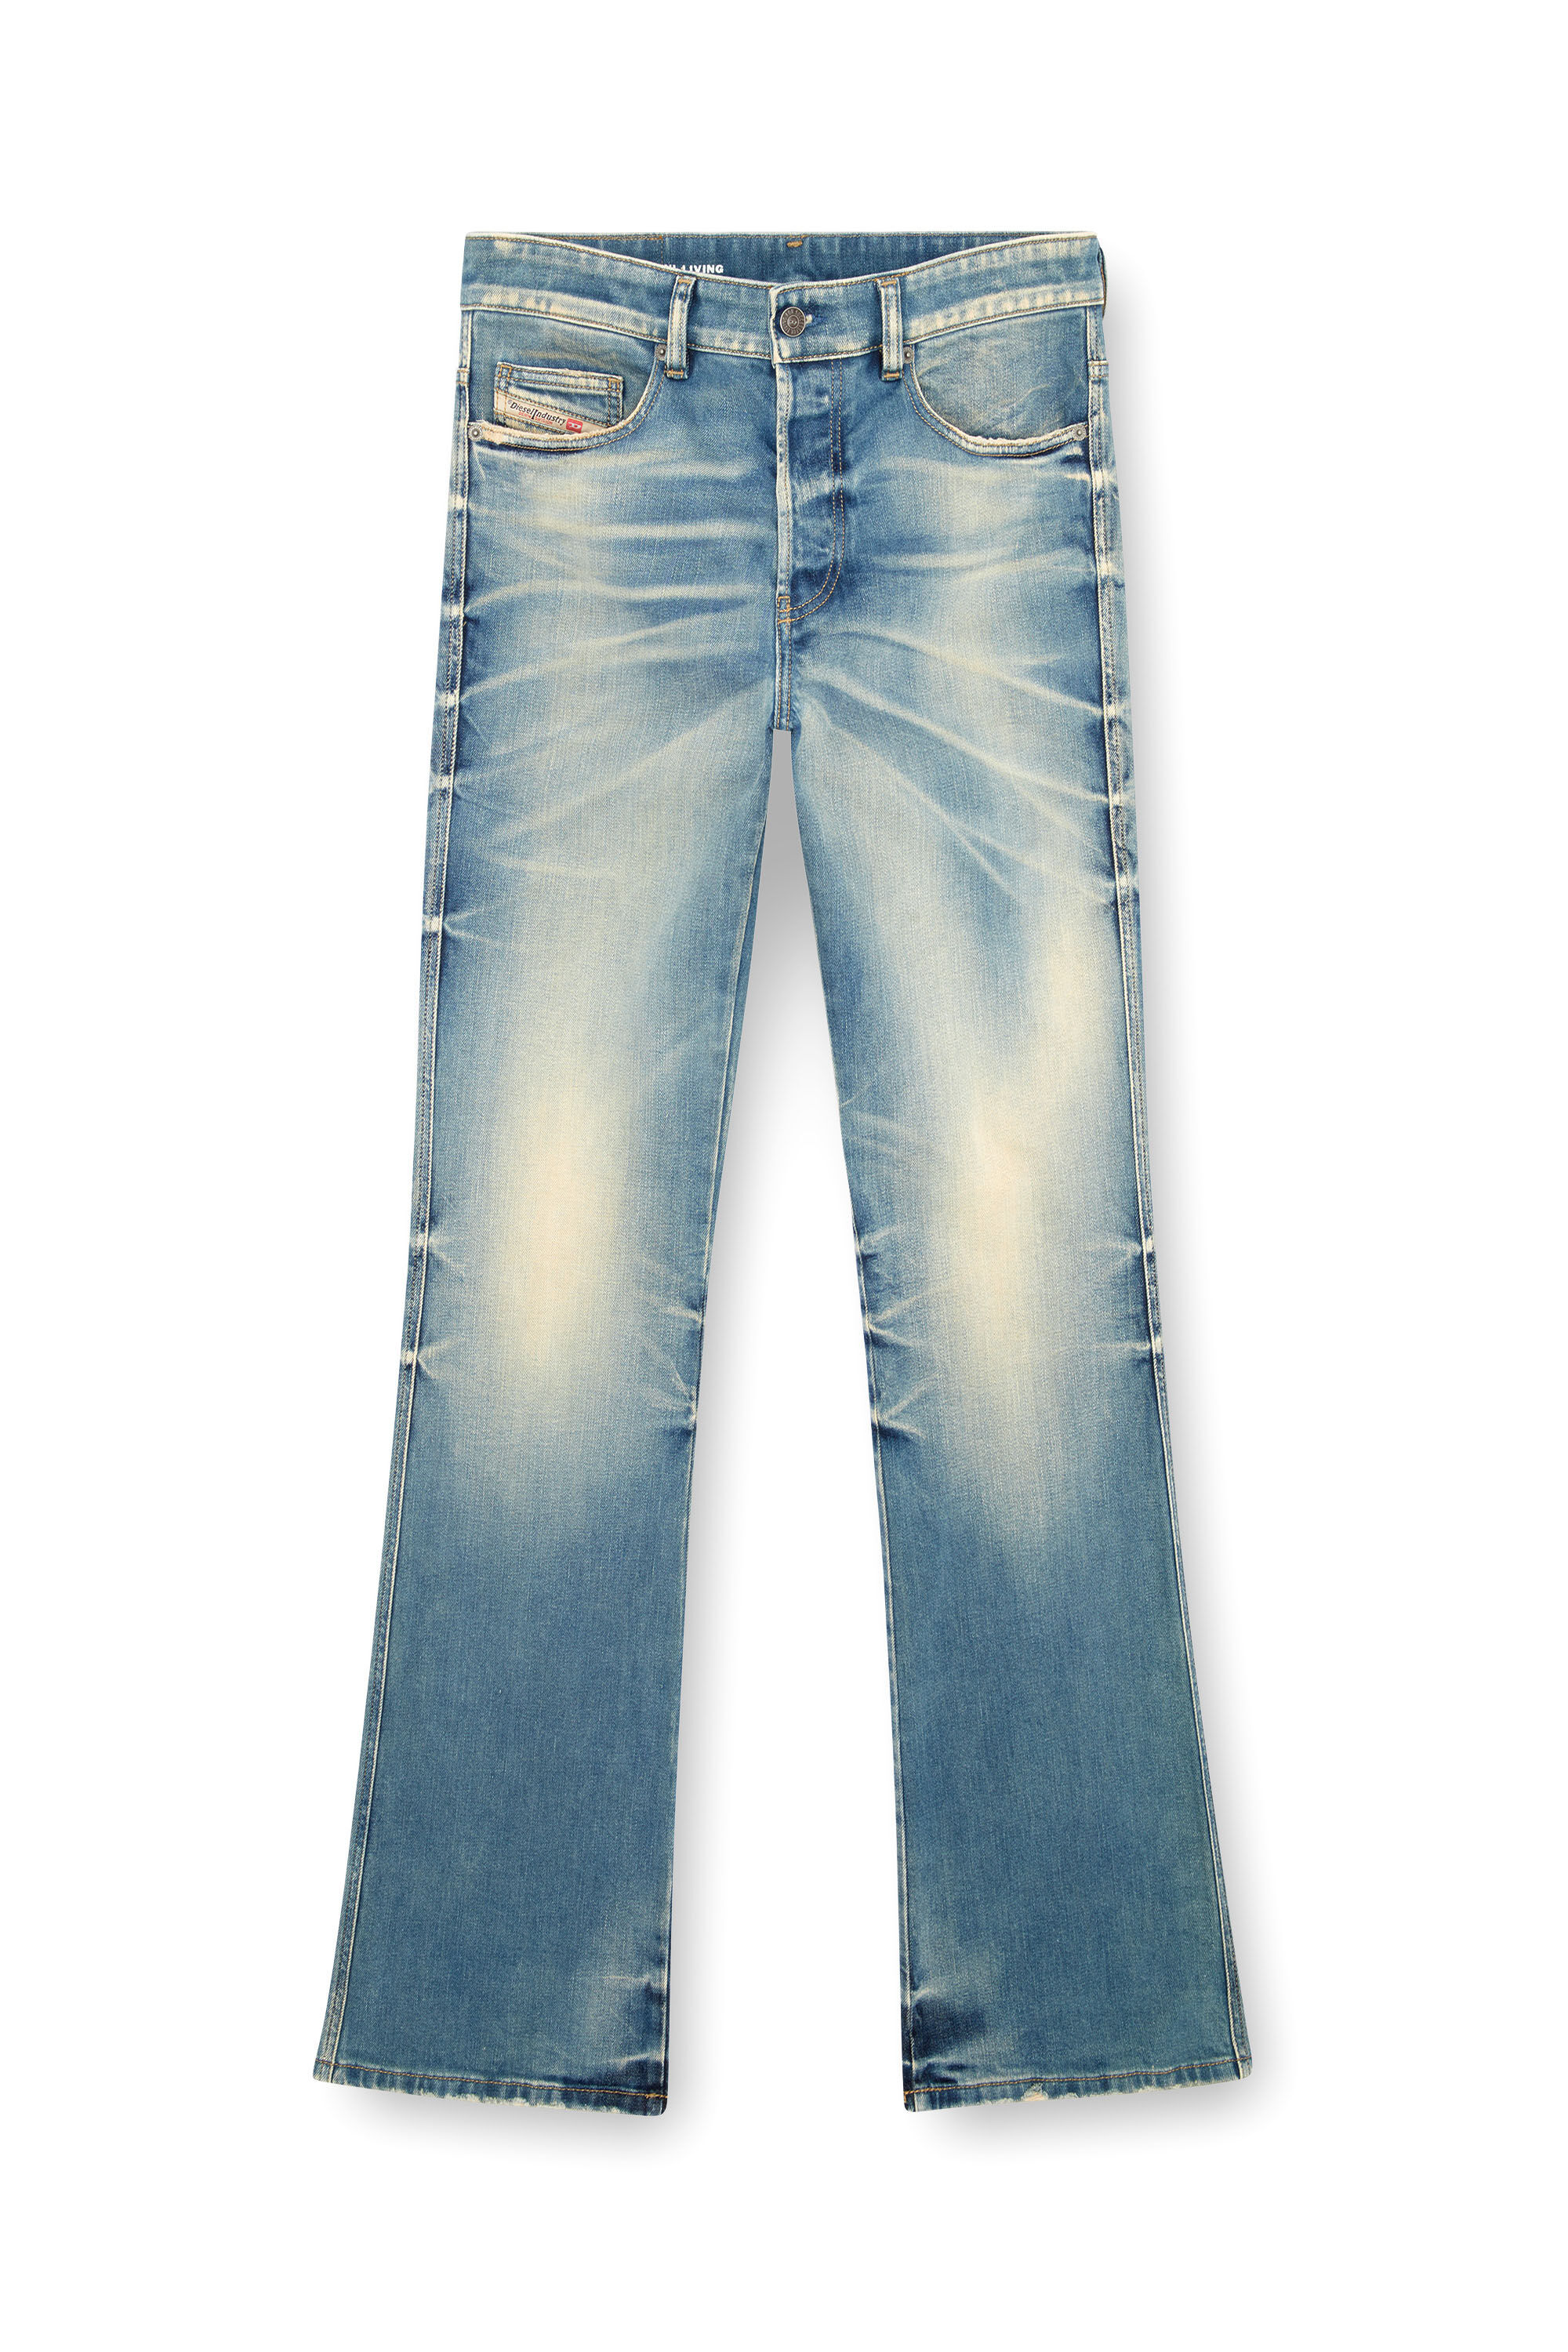 Diesel - Bootcut Jeans 1998 D-Buck 09J62, Hombre Bootcut Jeans - 1998 D-Buck in Azul marino - Image 2